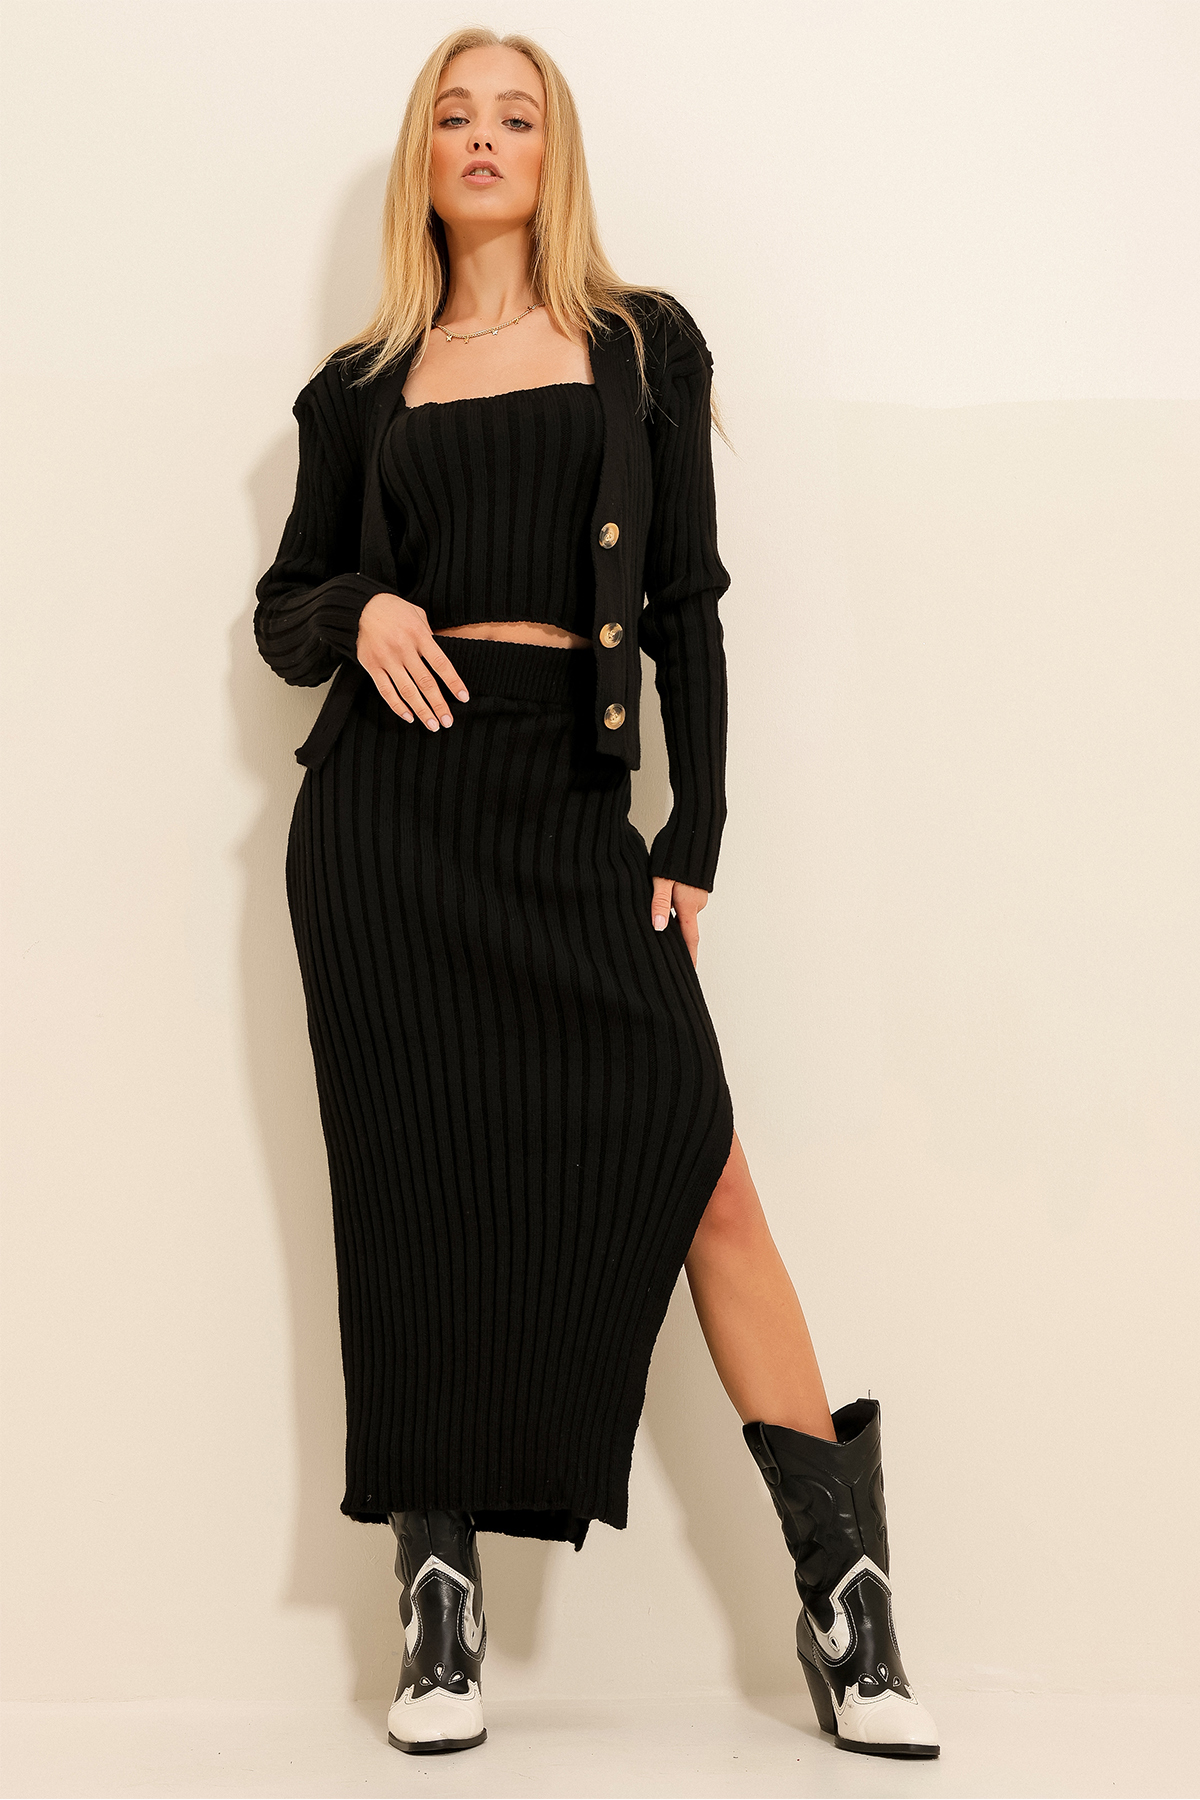 Levně Trend Alaçatı Stili Women's Black Slit Skirt Strap Top and Knitwear Cardigan 3 Piece Set